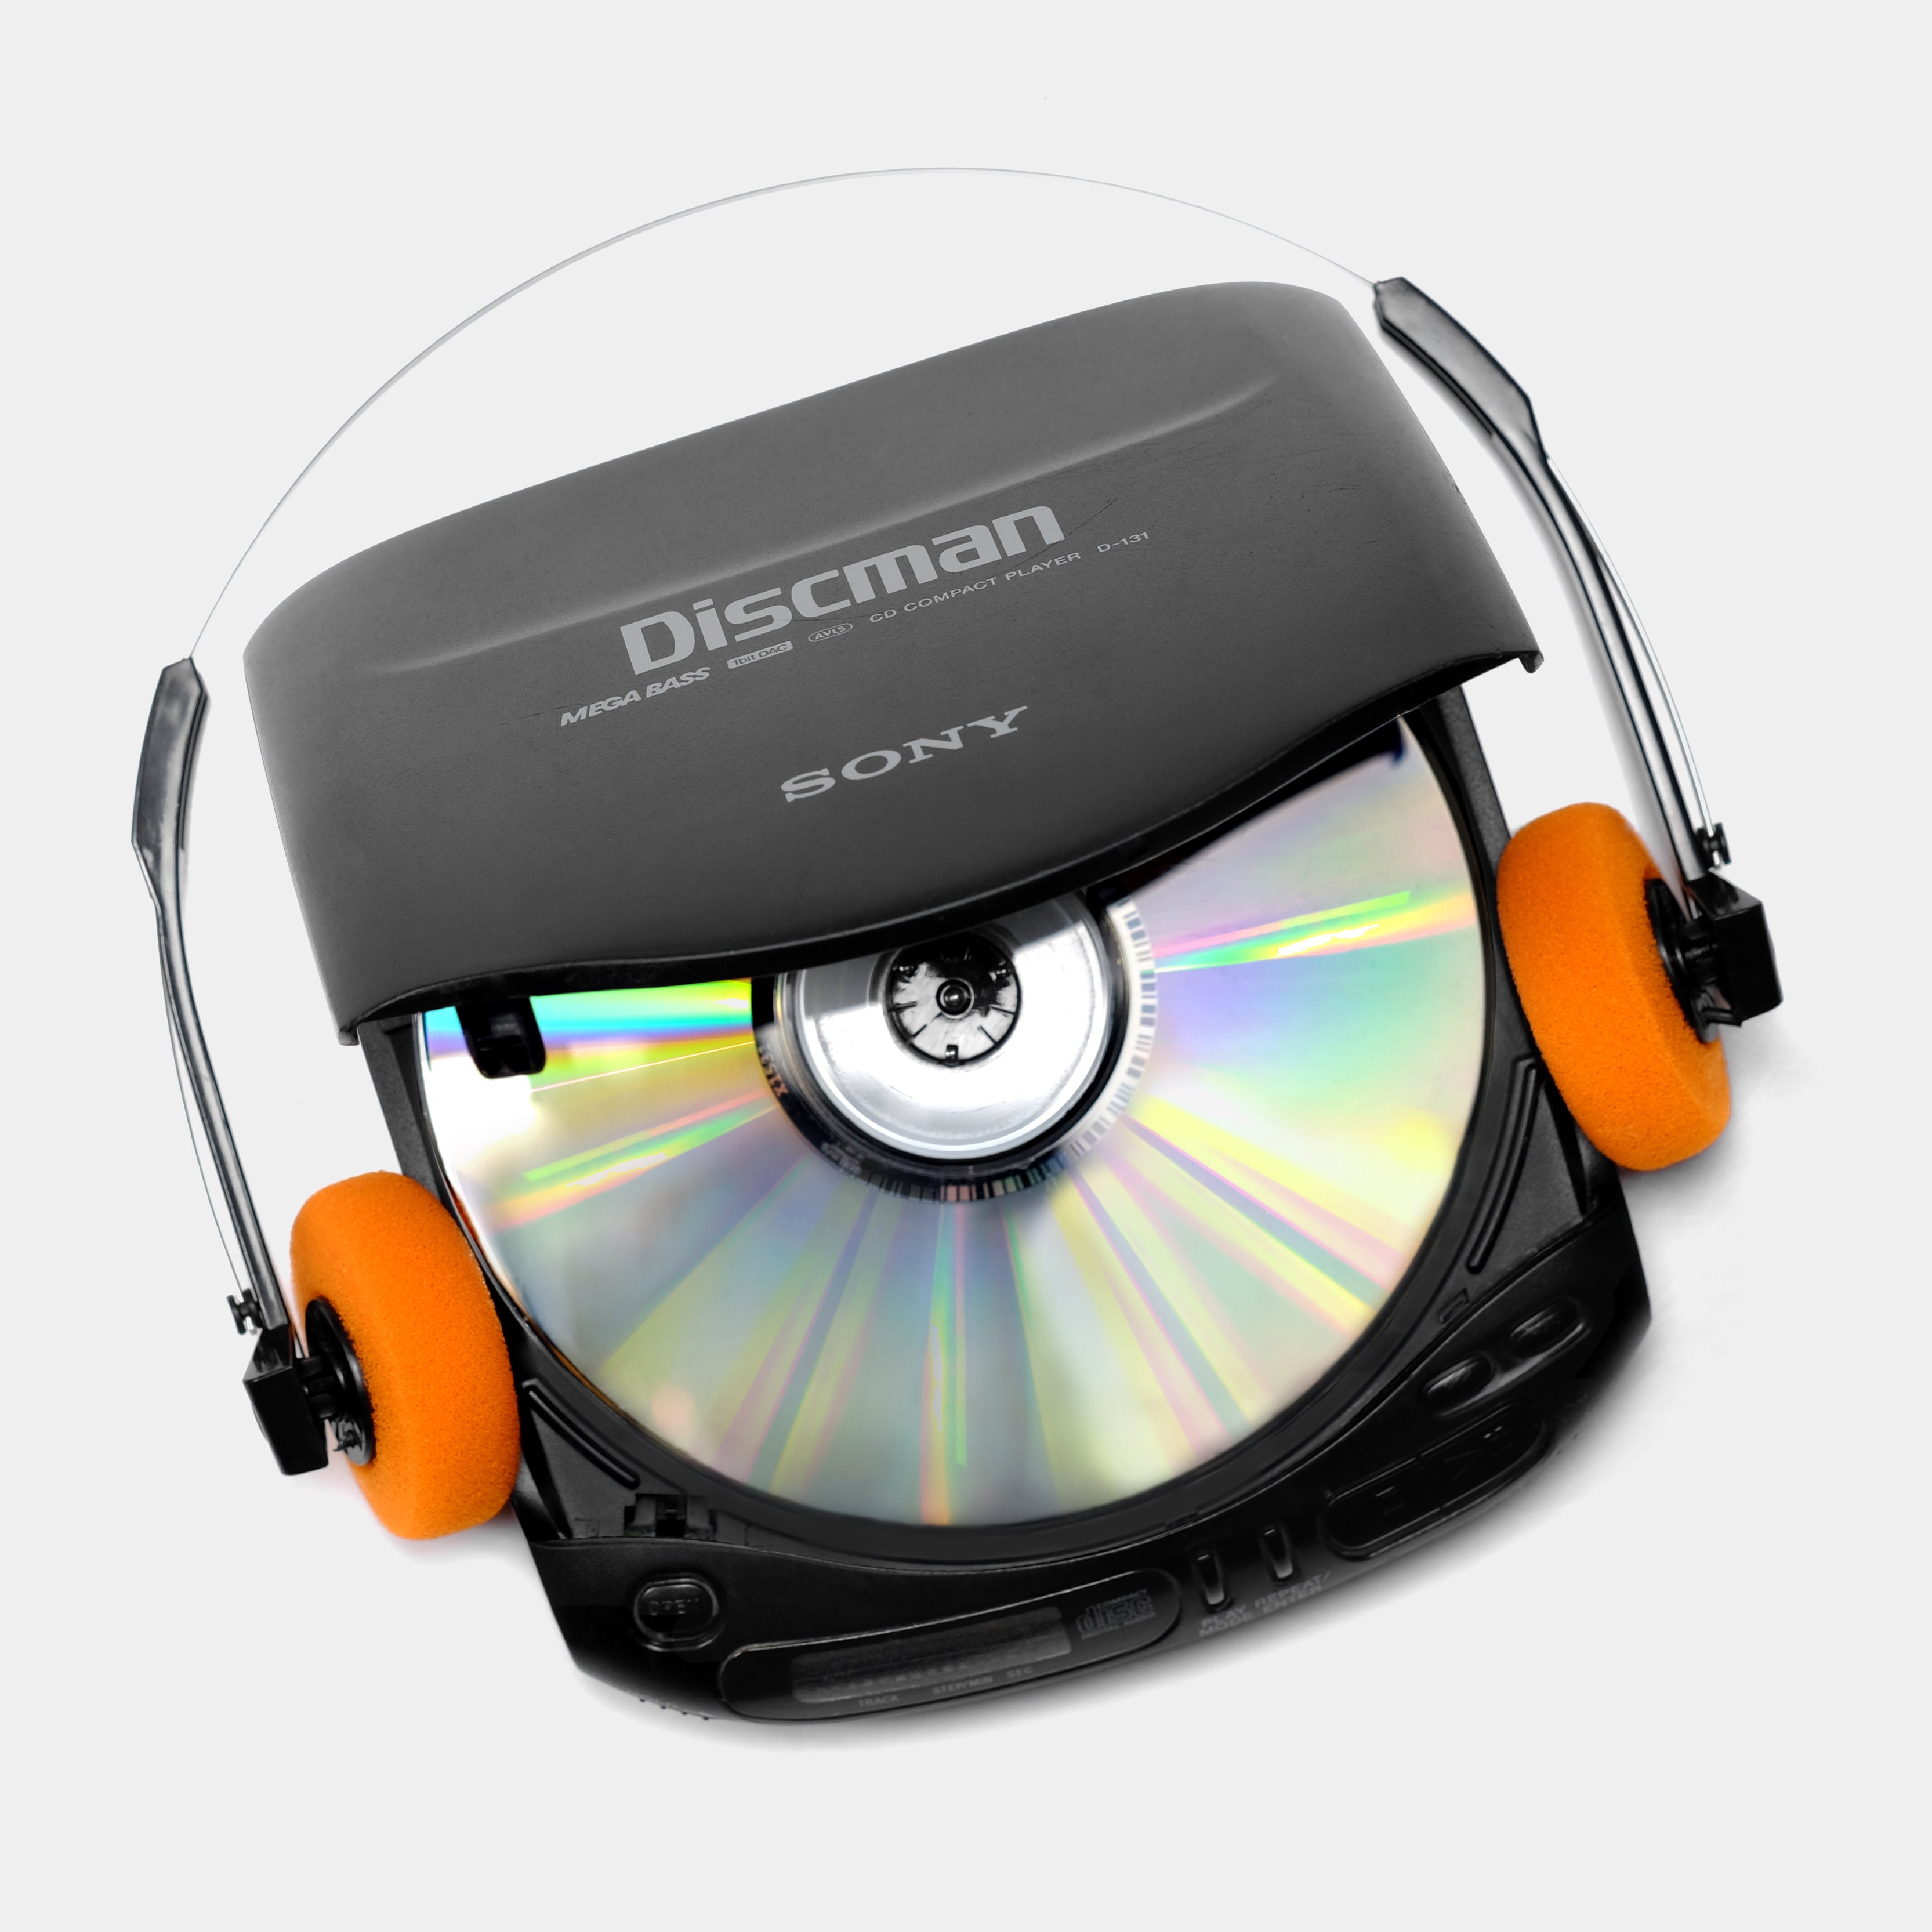 Sony Discman D-131 Portable CD Player